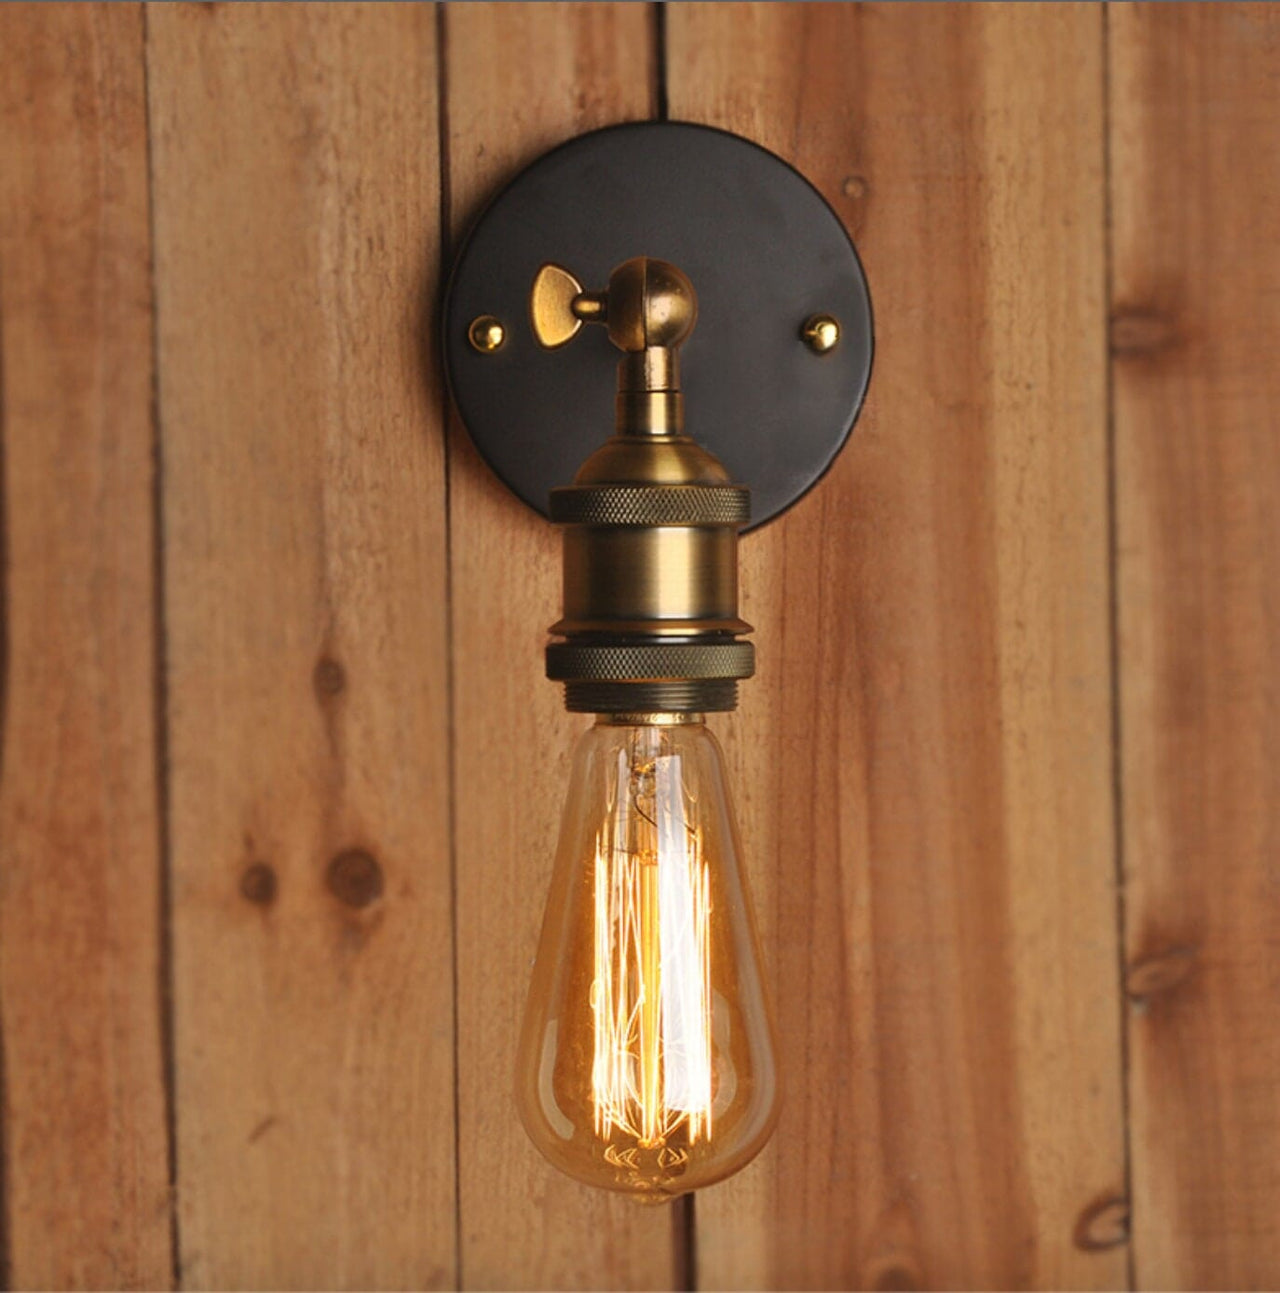 American Retro Vintage Wall Lamp "RETRO-FIT" Rustic Light Fixture Sconces Artedimo 